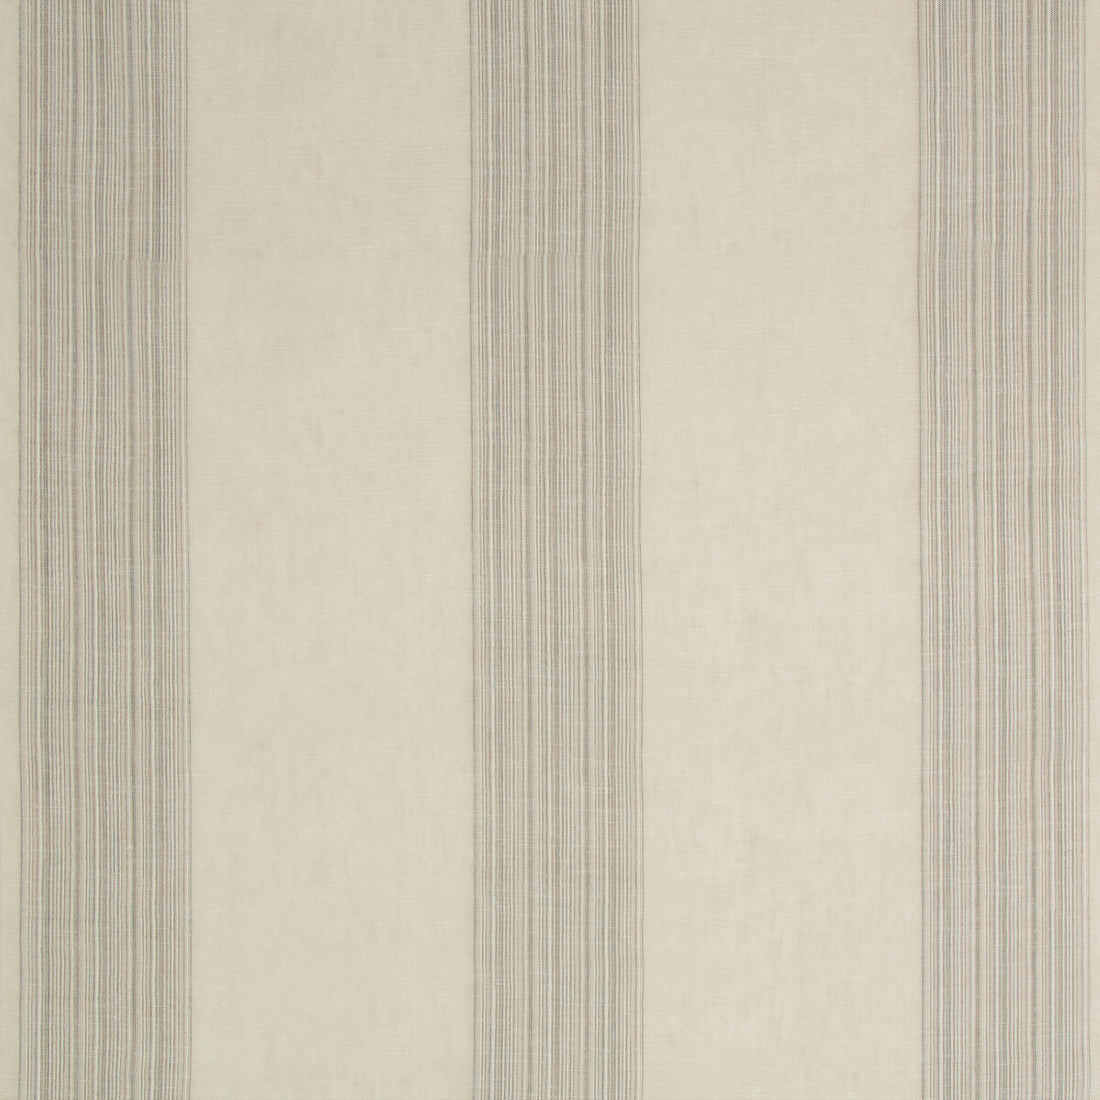 Kravet Fabric fabric in 4608-11 color - pattern 4608.11.0 - by Kravet Design